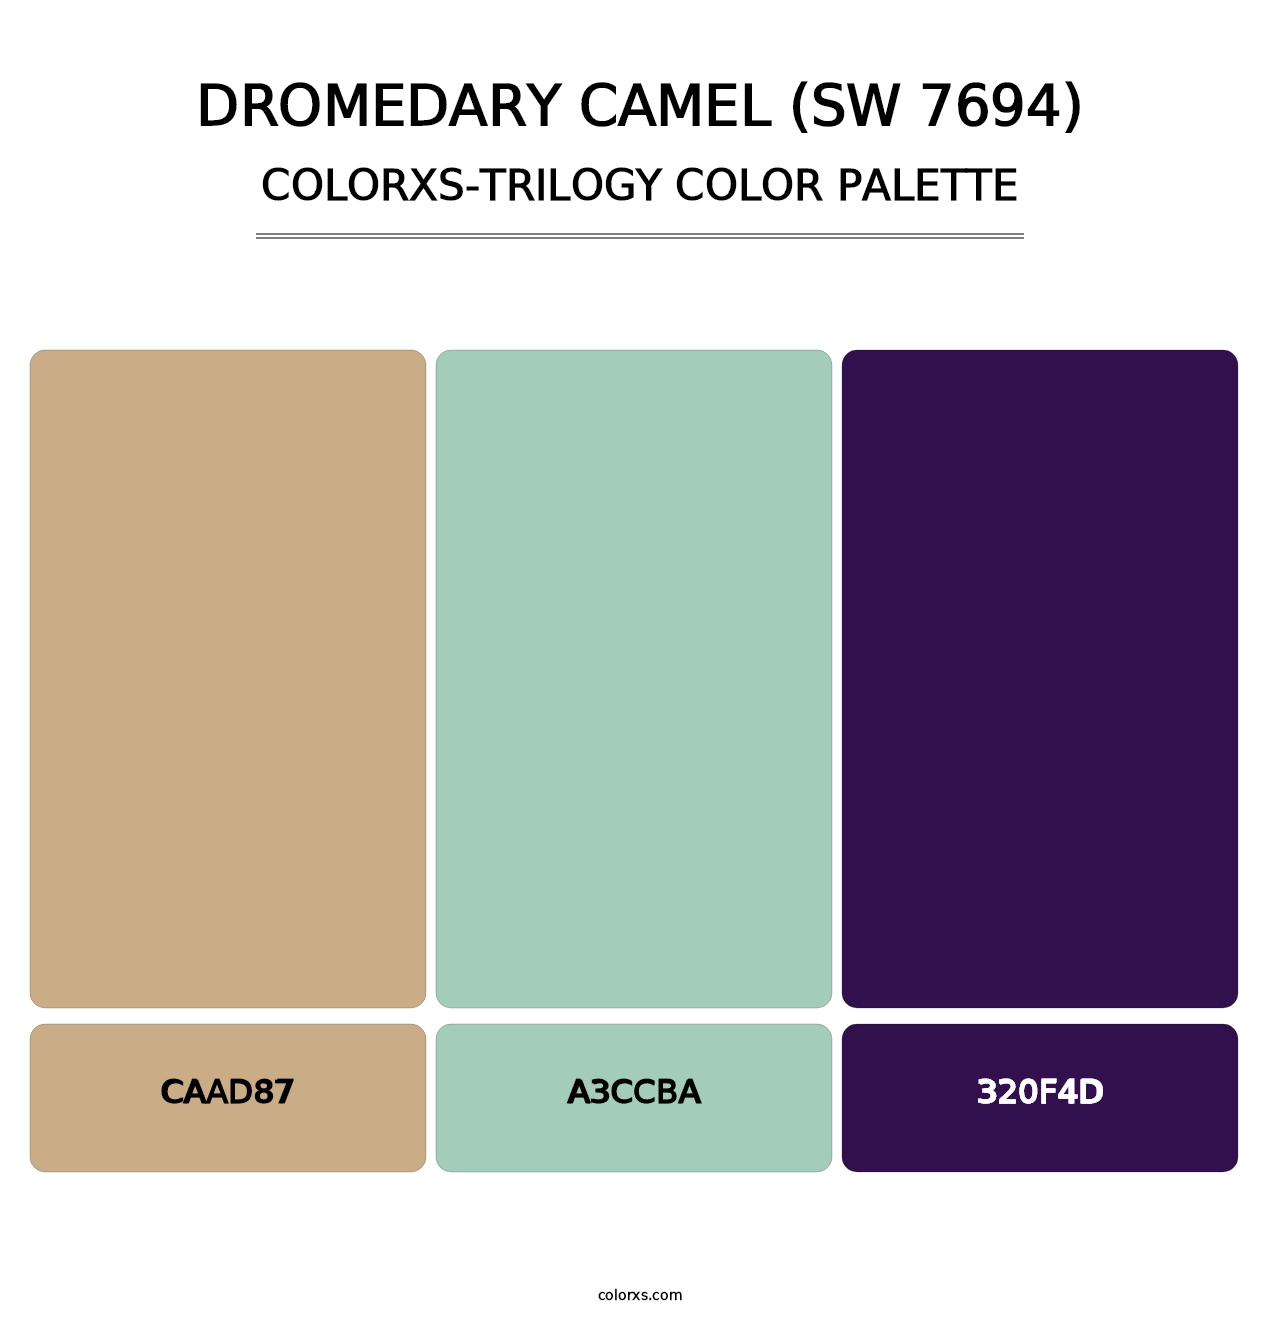 Dromedary Camel (SW 7694) - Colorxs Trilogy Palette